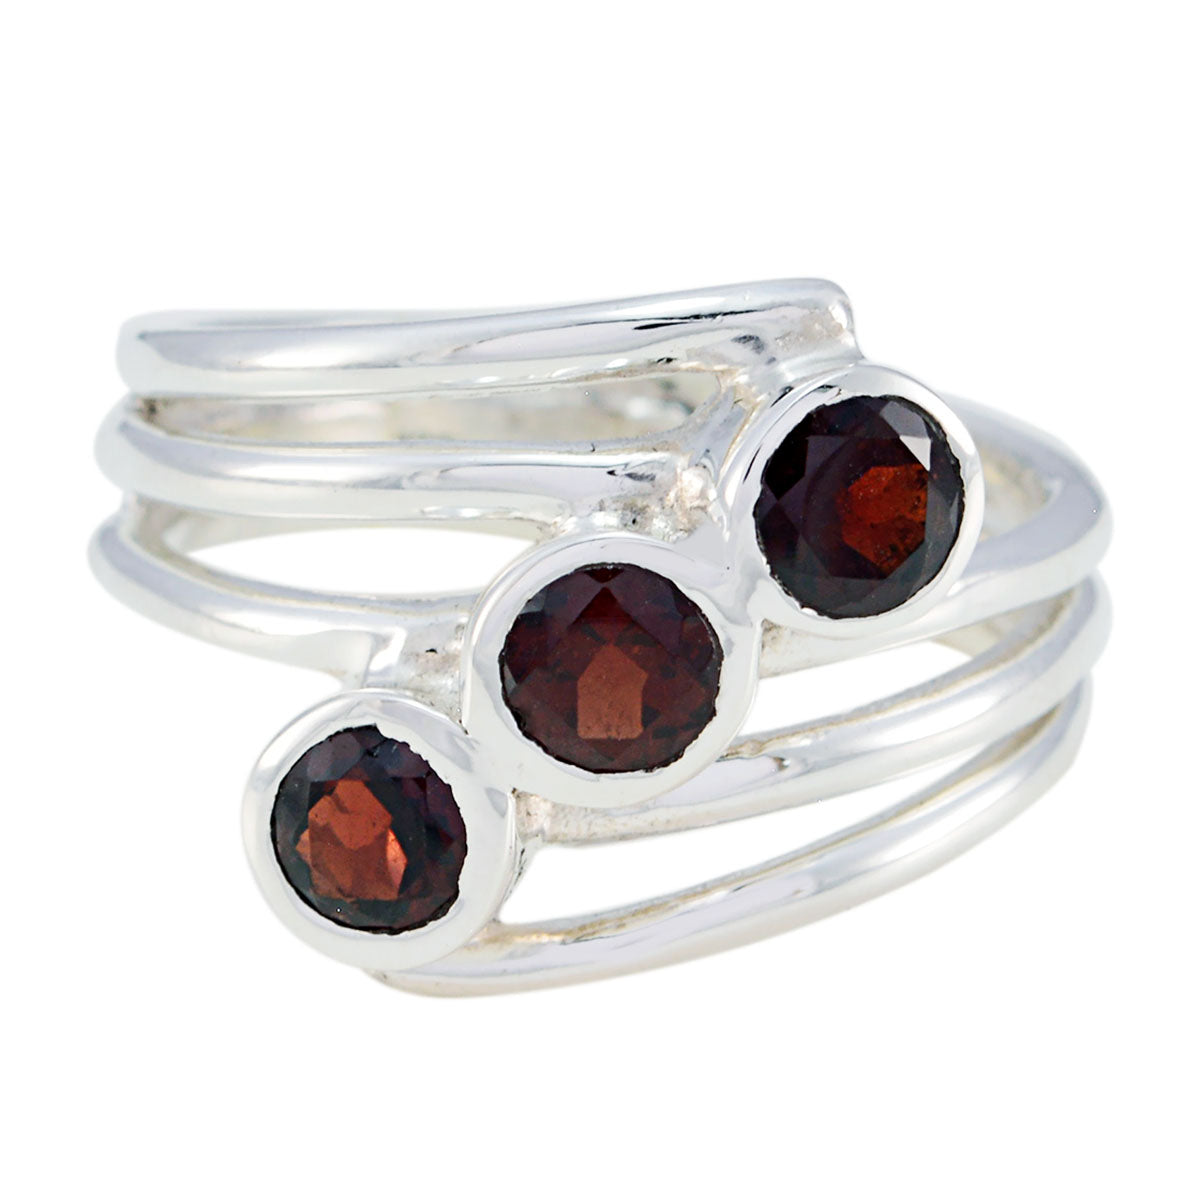 Appealing Gemstone Garnet Sterling Silver Rings Coordinates Jewelry